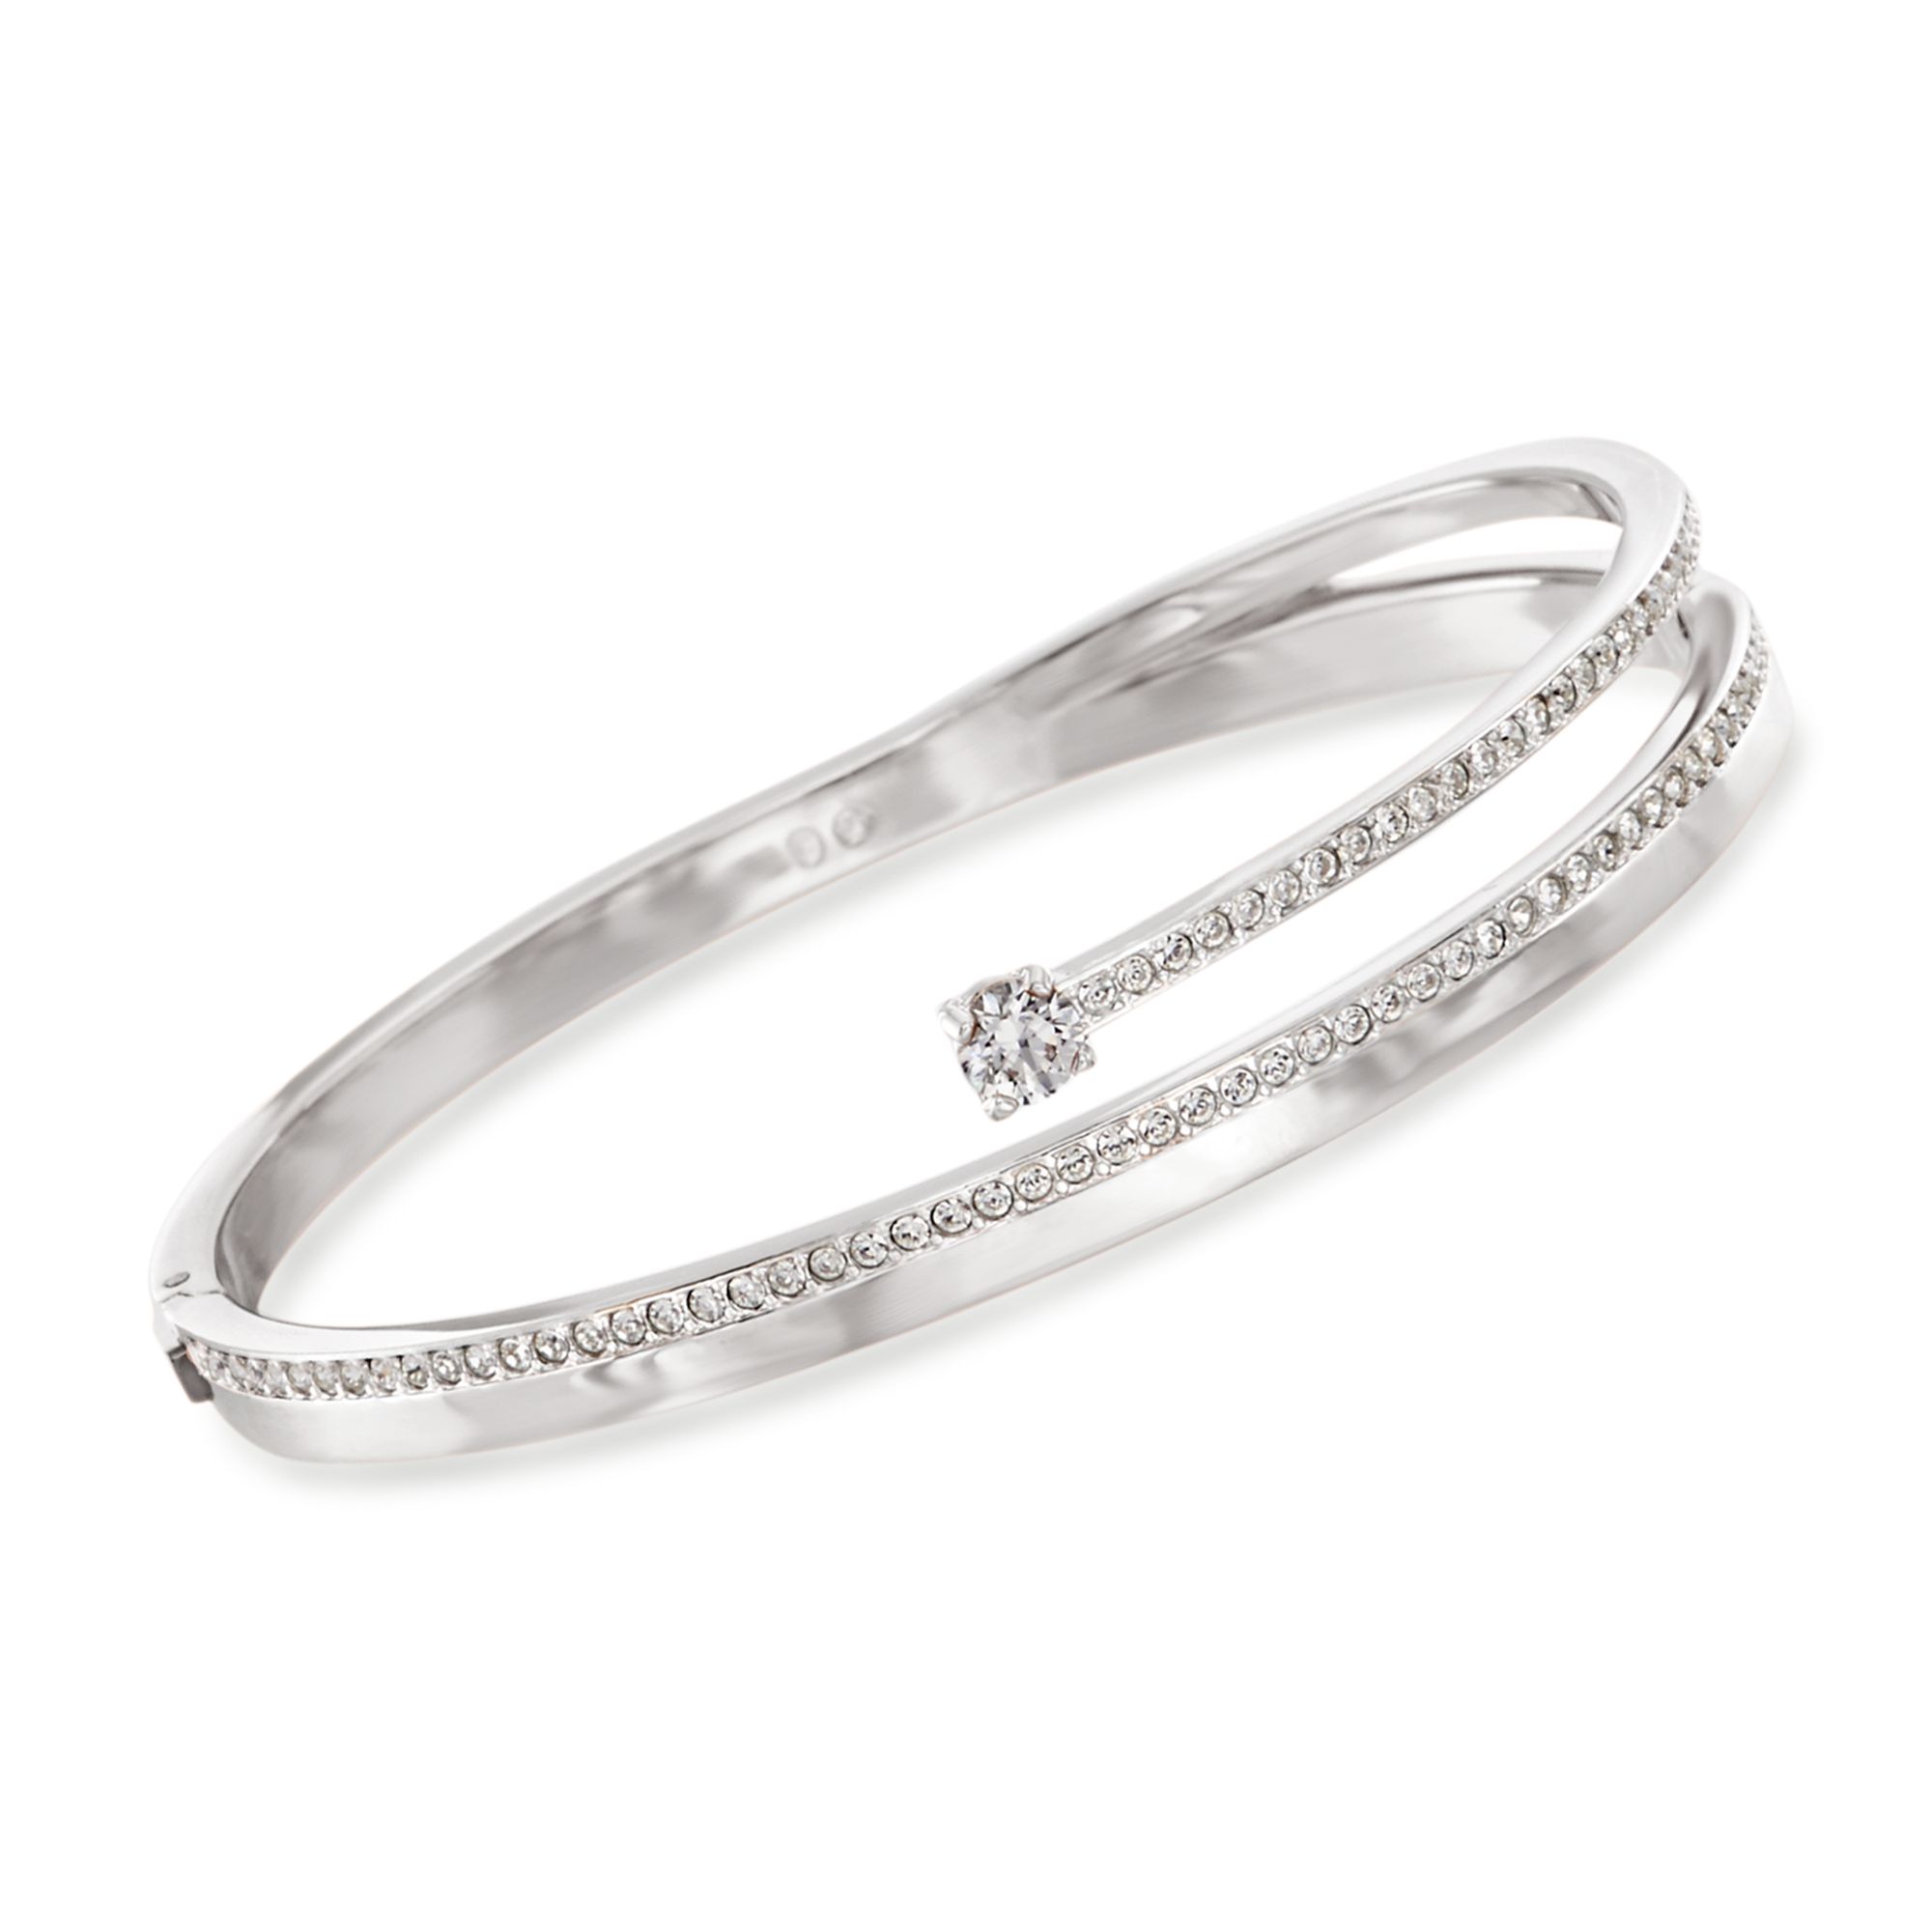 Swarovski Crystal "Fresh" Crystal Bangle Bracelet in Silvertone |  Ross-Simons